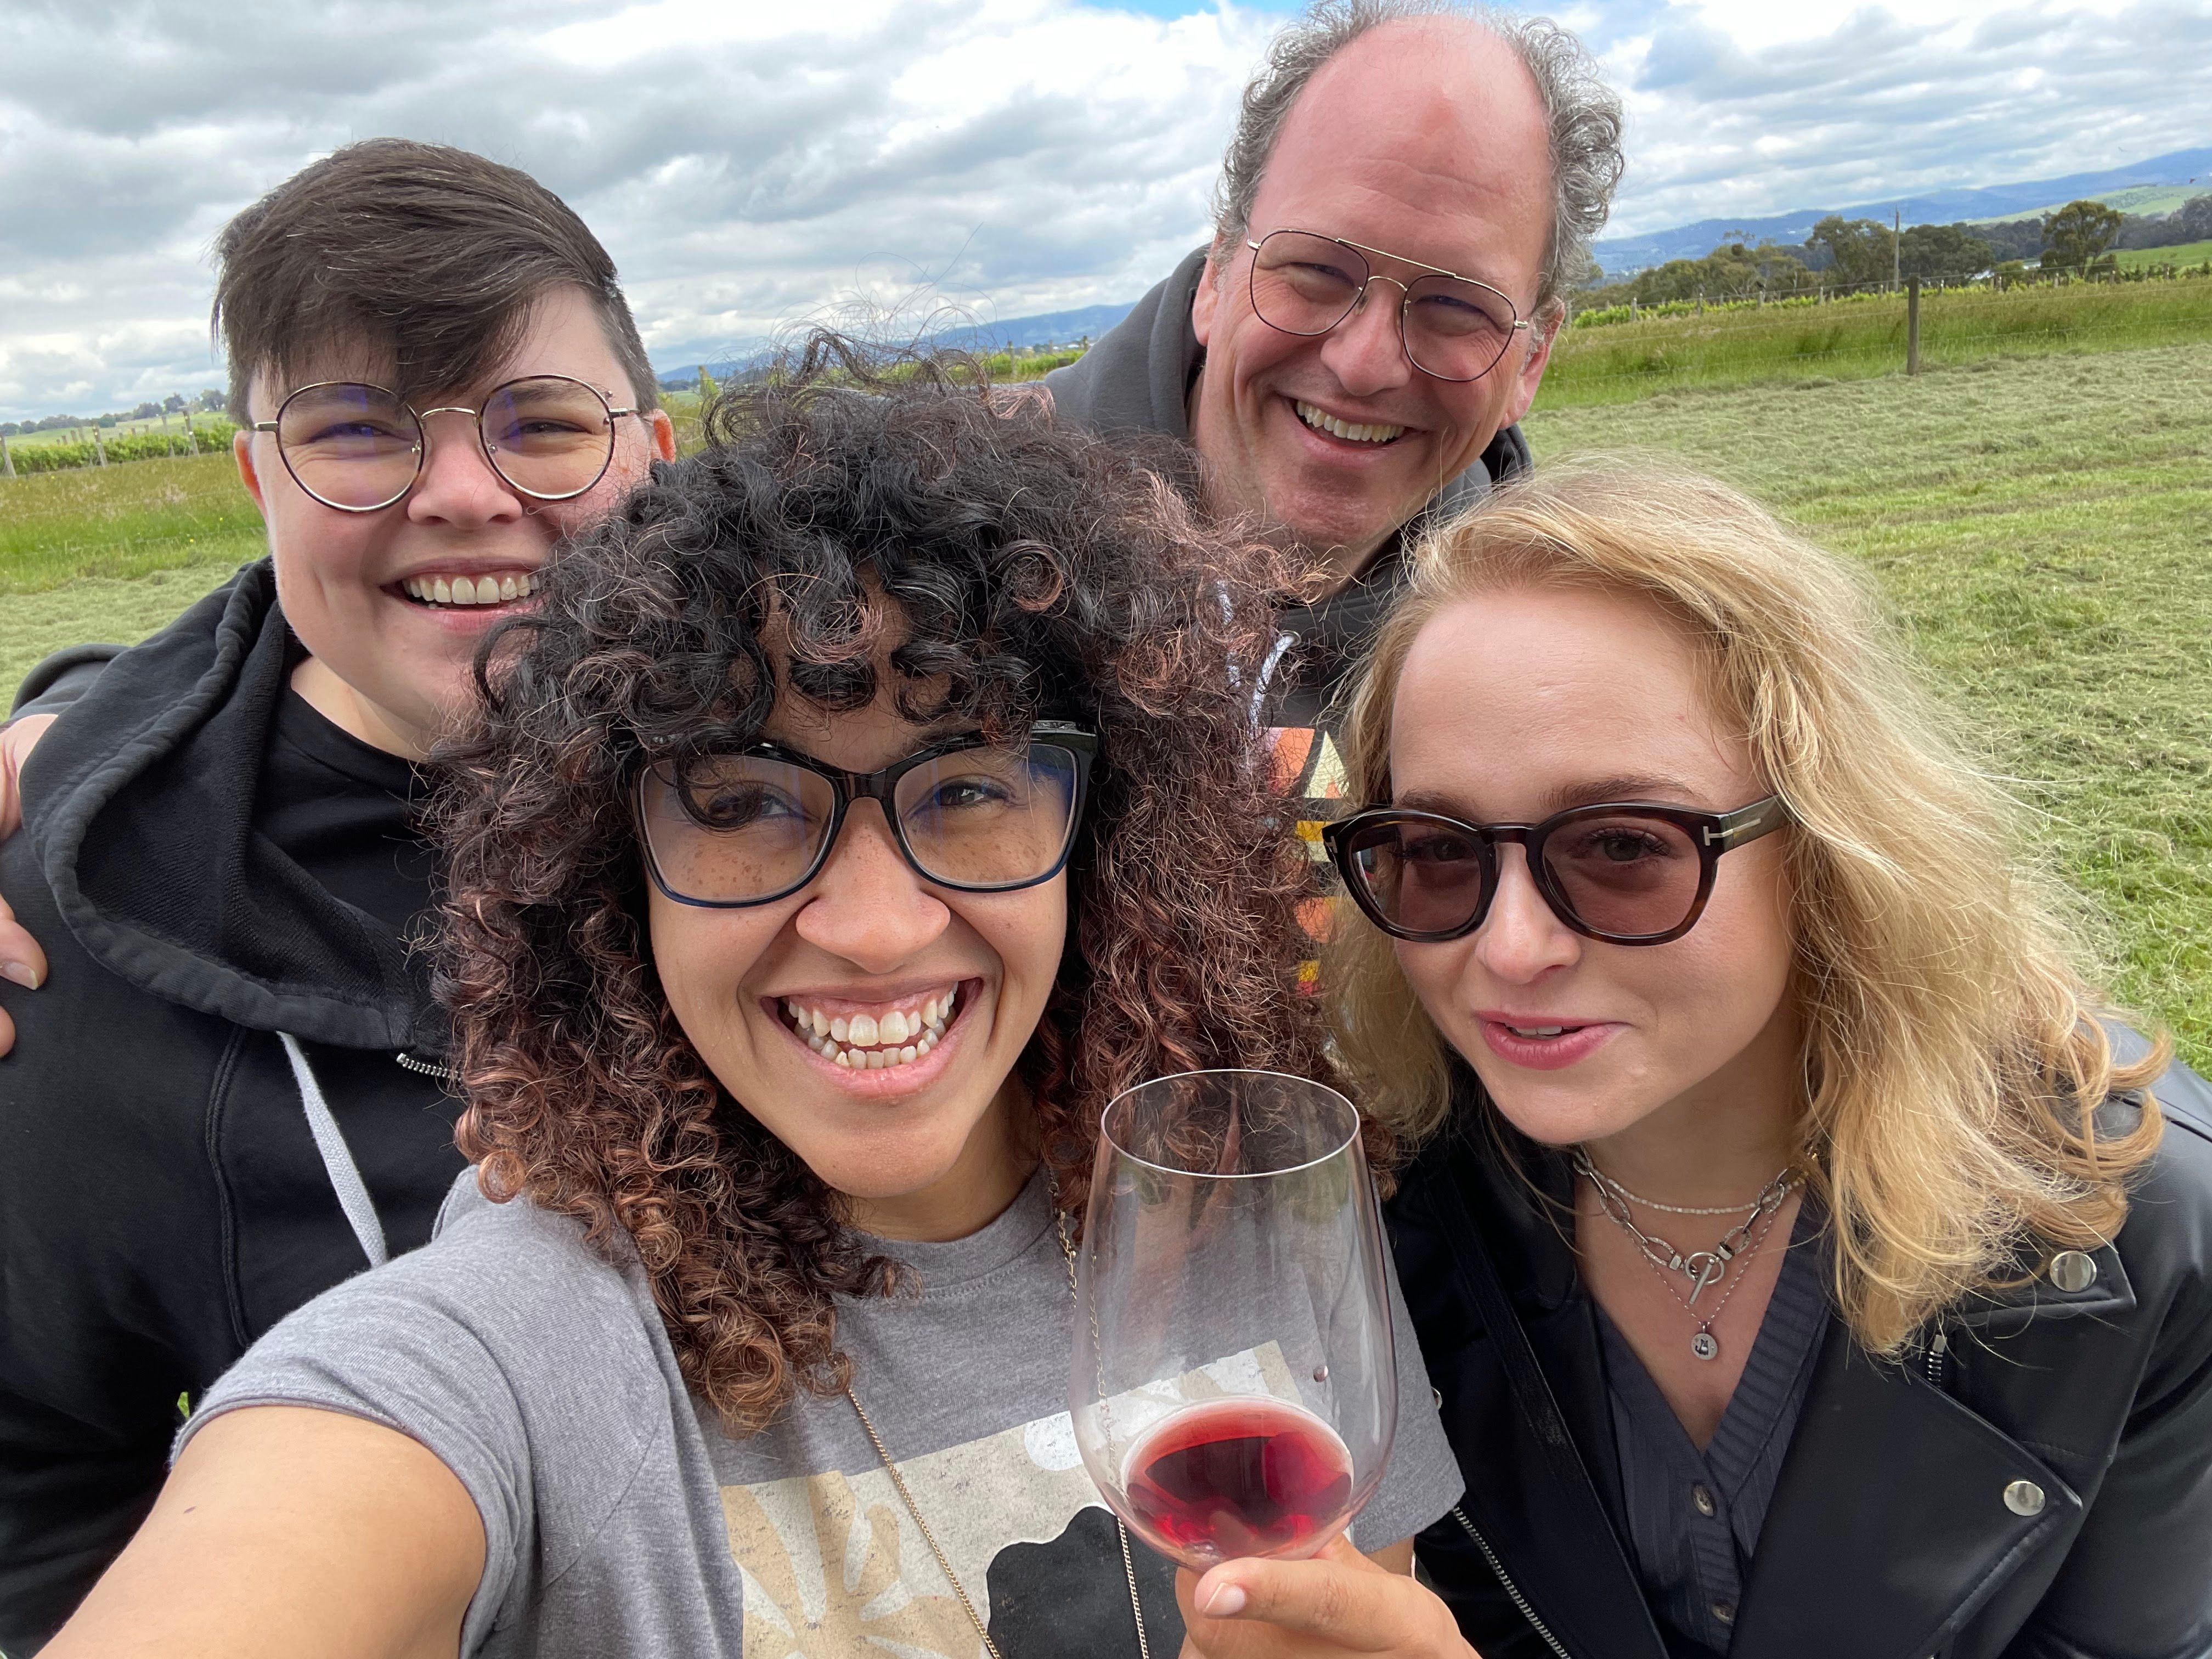 Bill having fun with colleagues at an Australian vineyard